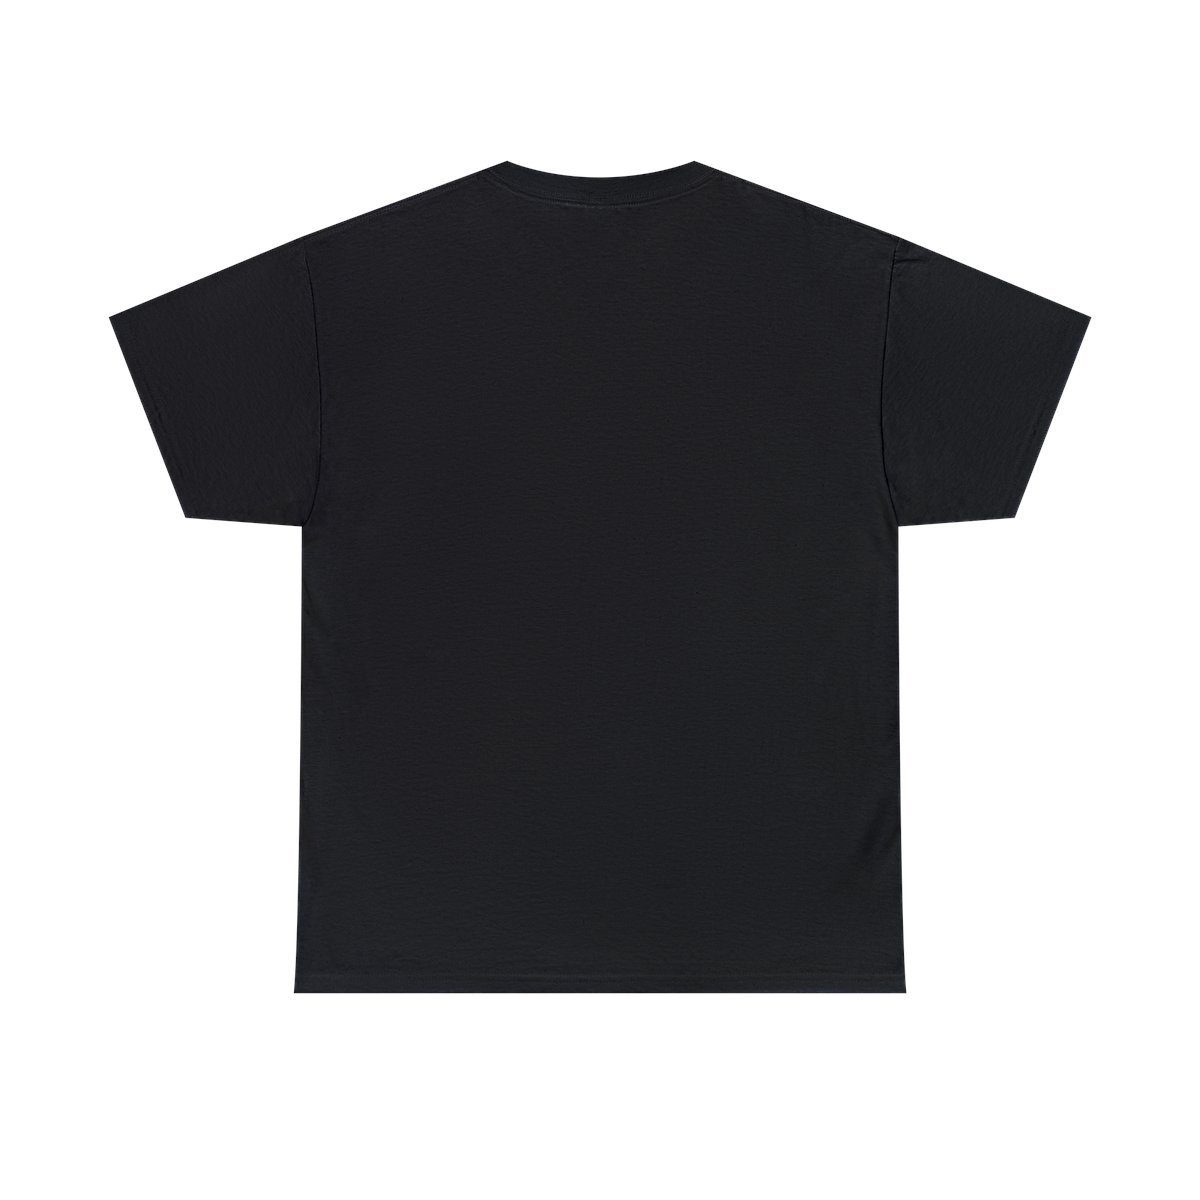 Angelica – Rock Stock & Barrel Short Sleeve Tshirt